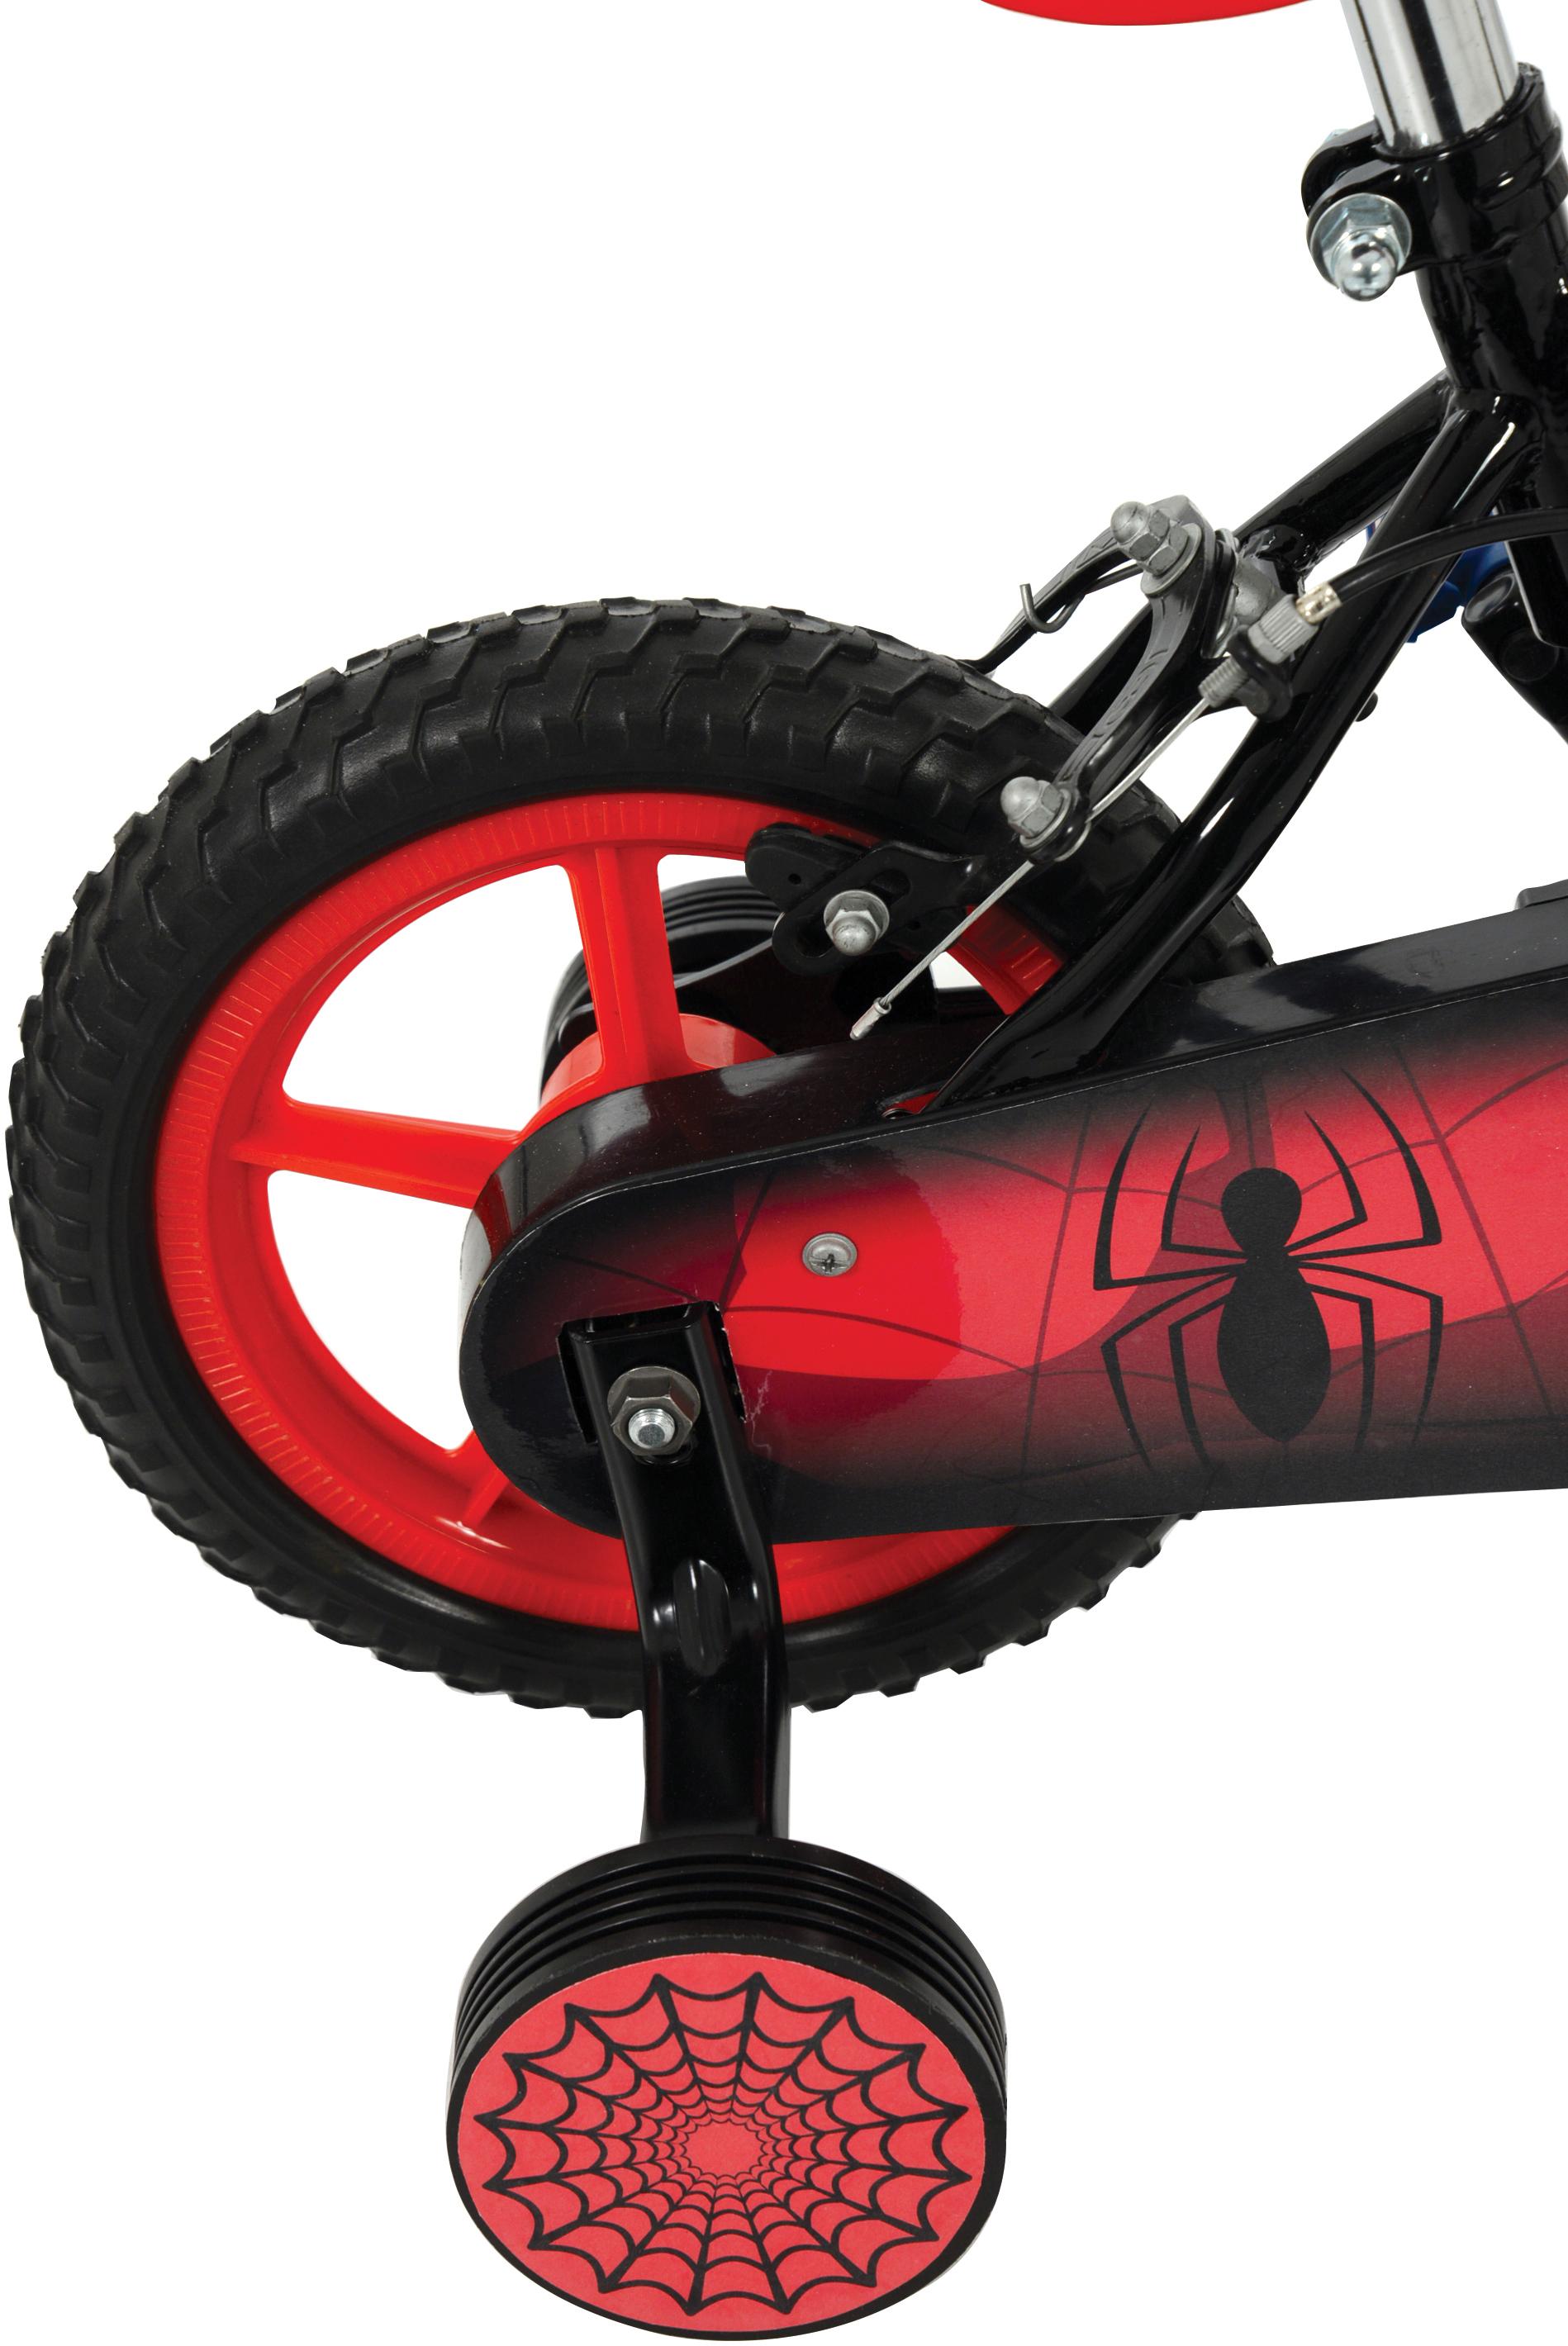 spiderman bike 12 inch uk